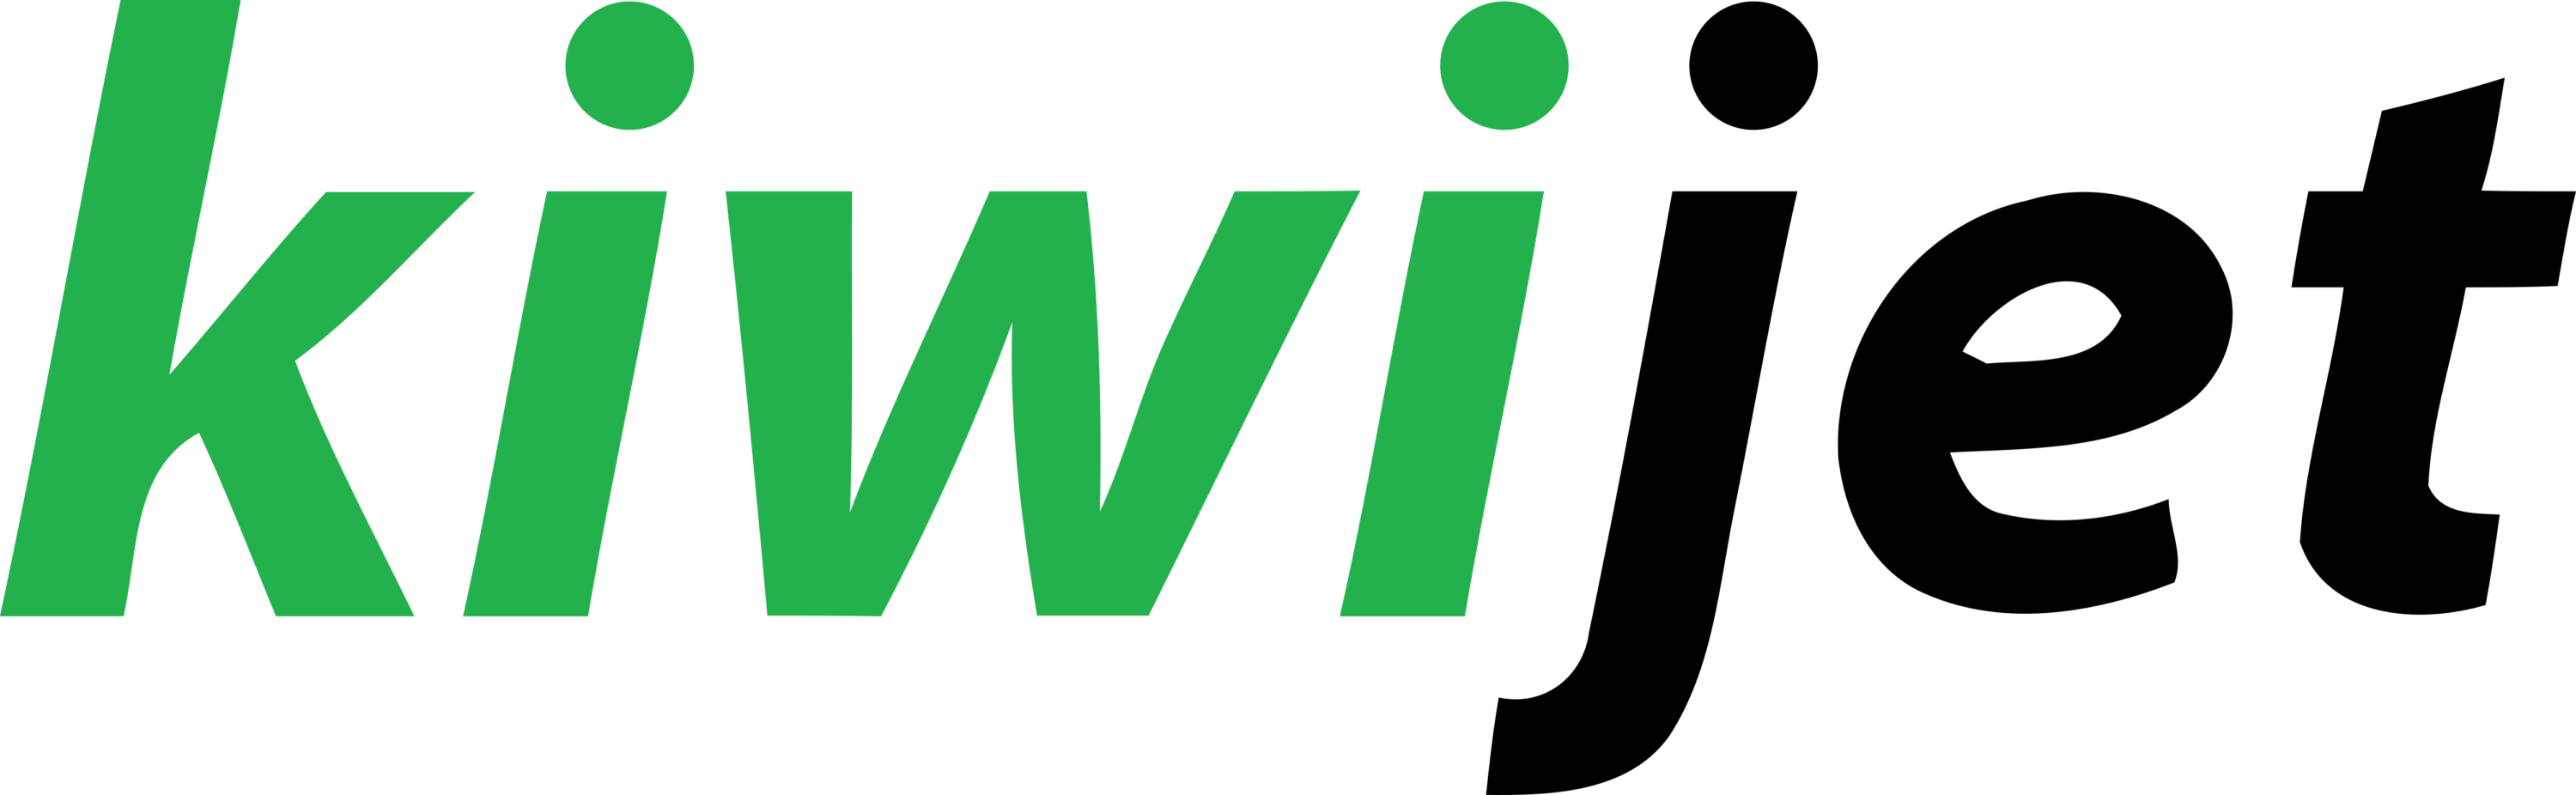 Kiwijet Logo